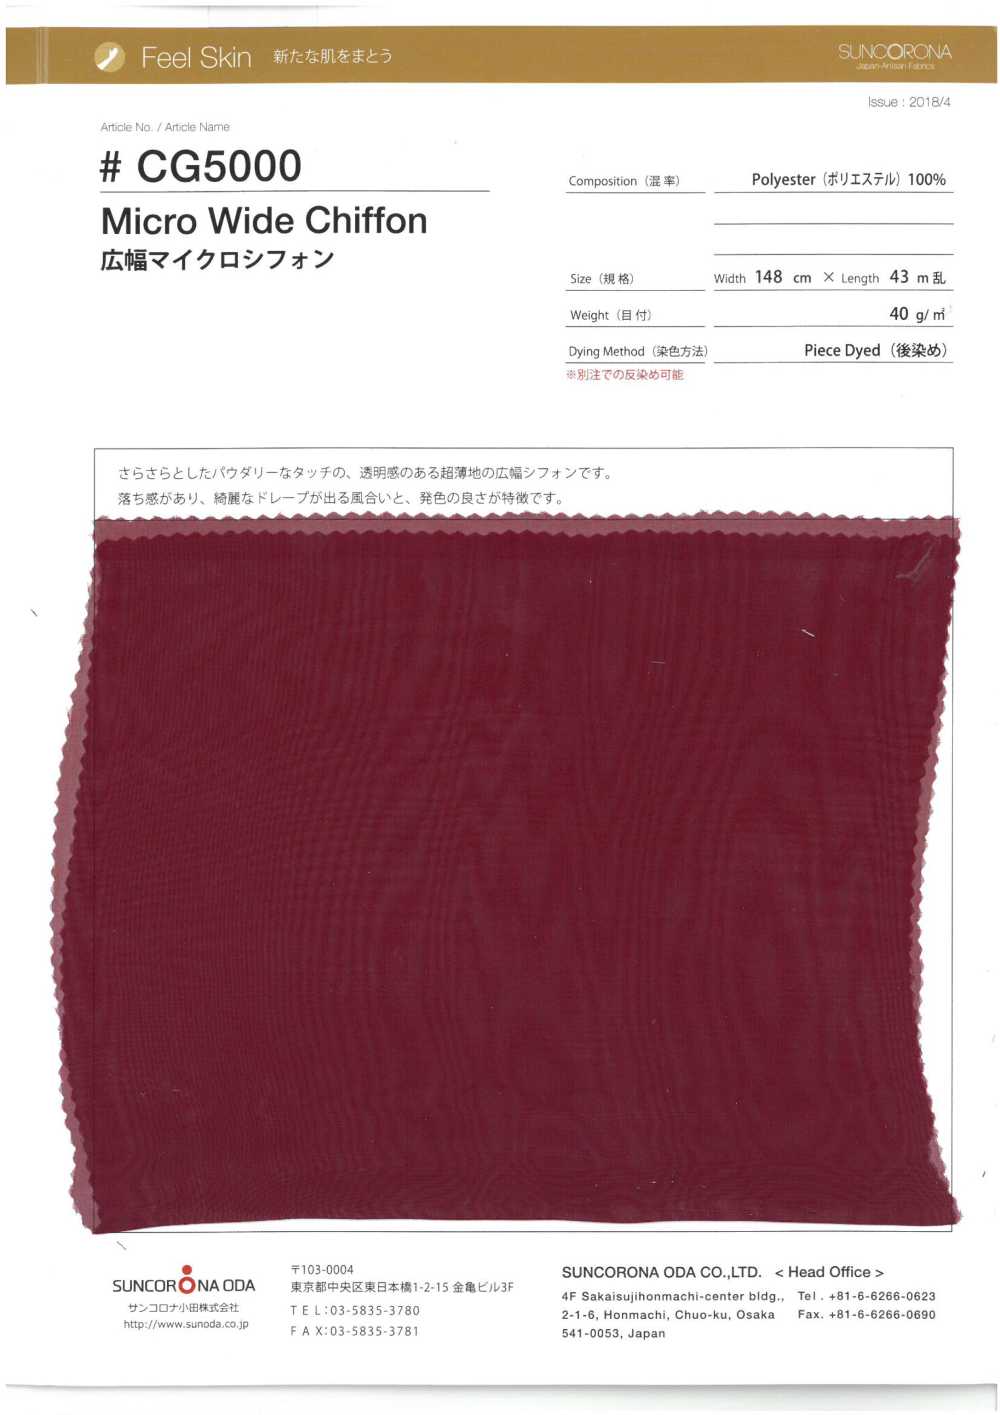 CG5000 Ancho Ancho Micro Gasa[Fabrica Textil] Suncorona Oda